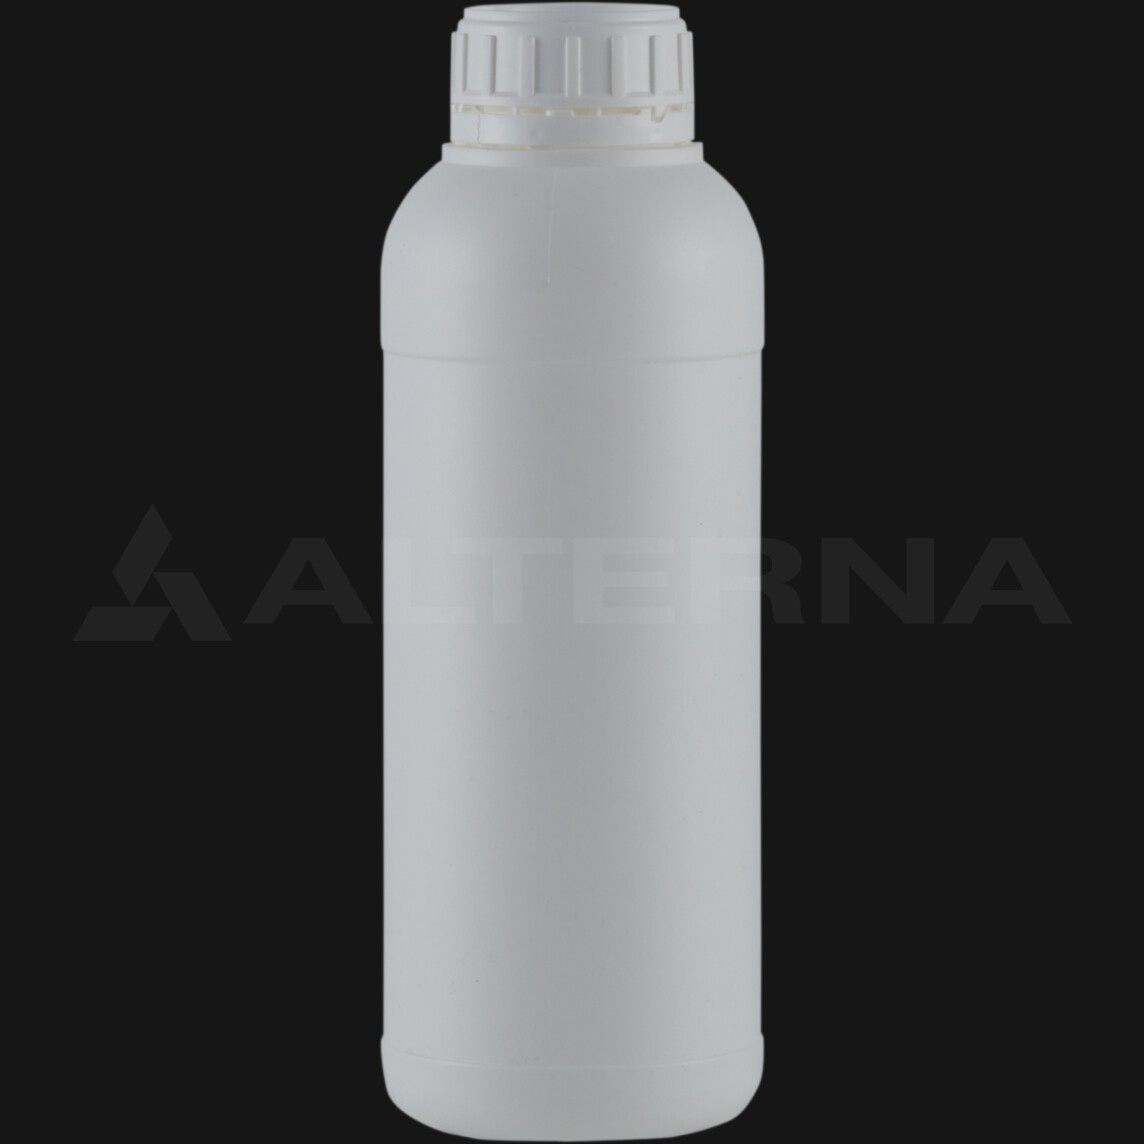 1000 ml HDPE Bottle with 50 mm Foam Seal Secure Cap